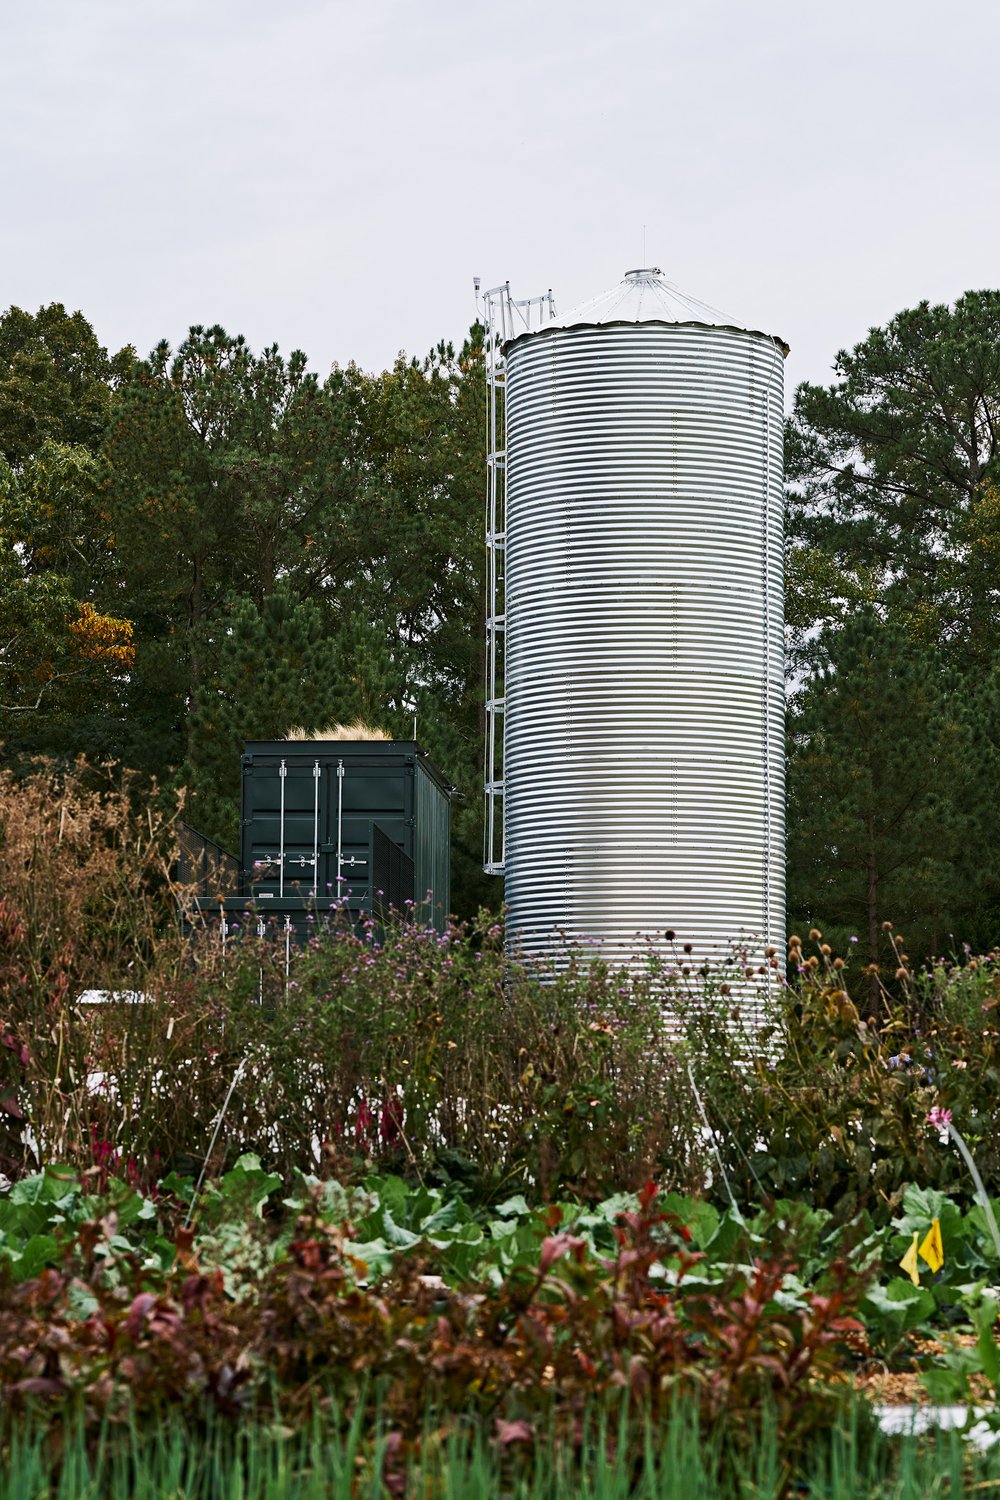 burkett-farm-container-barn-cistern.jpg